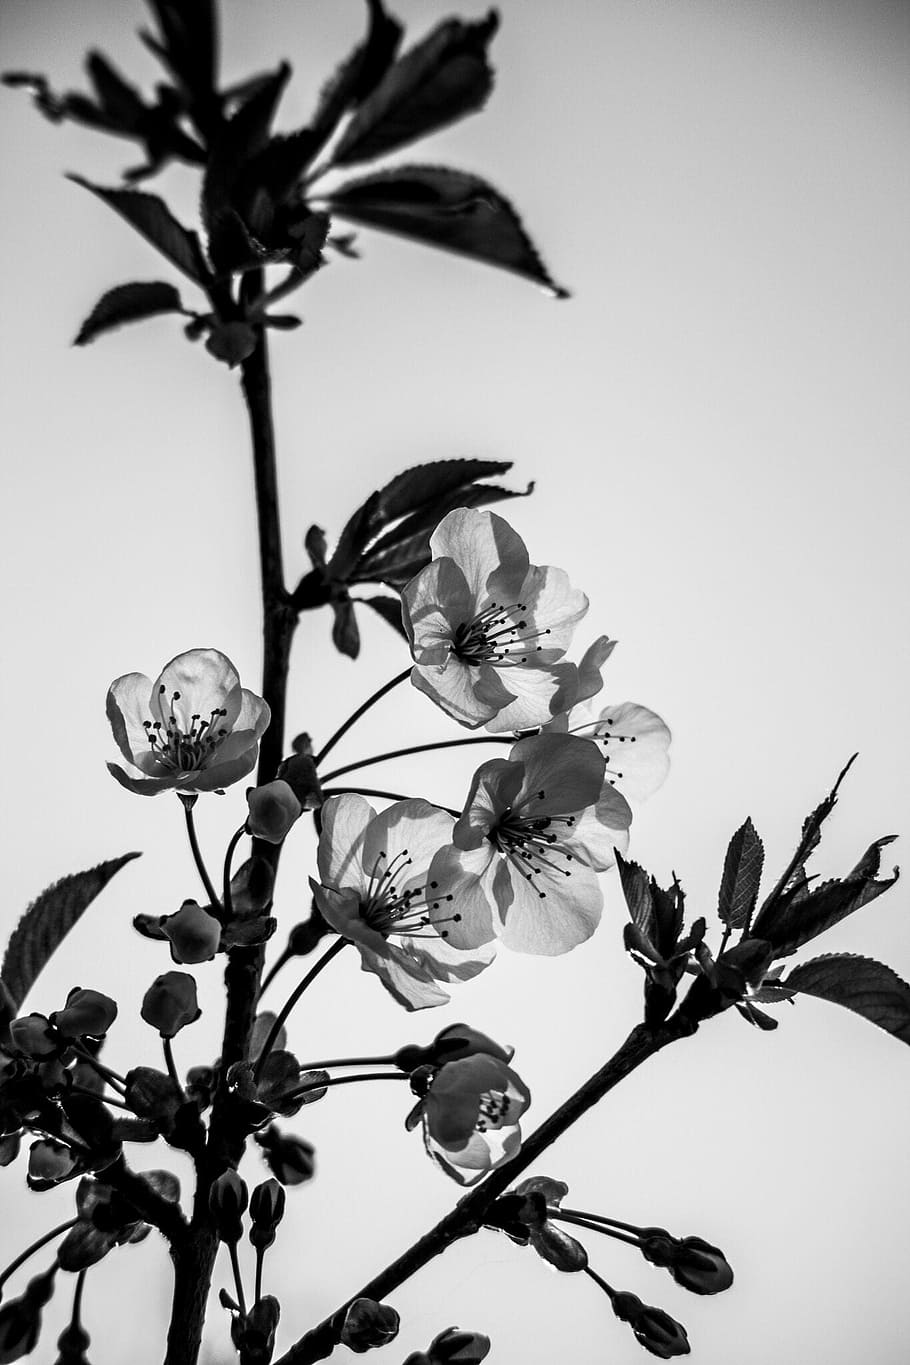 hitam dan putih, transparansi, bunga, transparan, dekorasi, putih, hitam, tanaman, pertumbuhan, tanaman berbunga